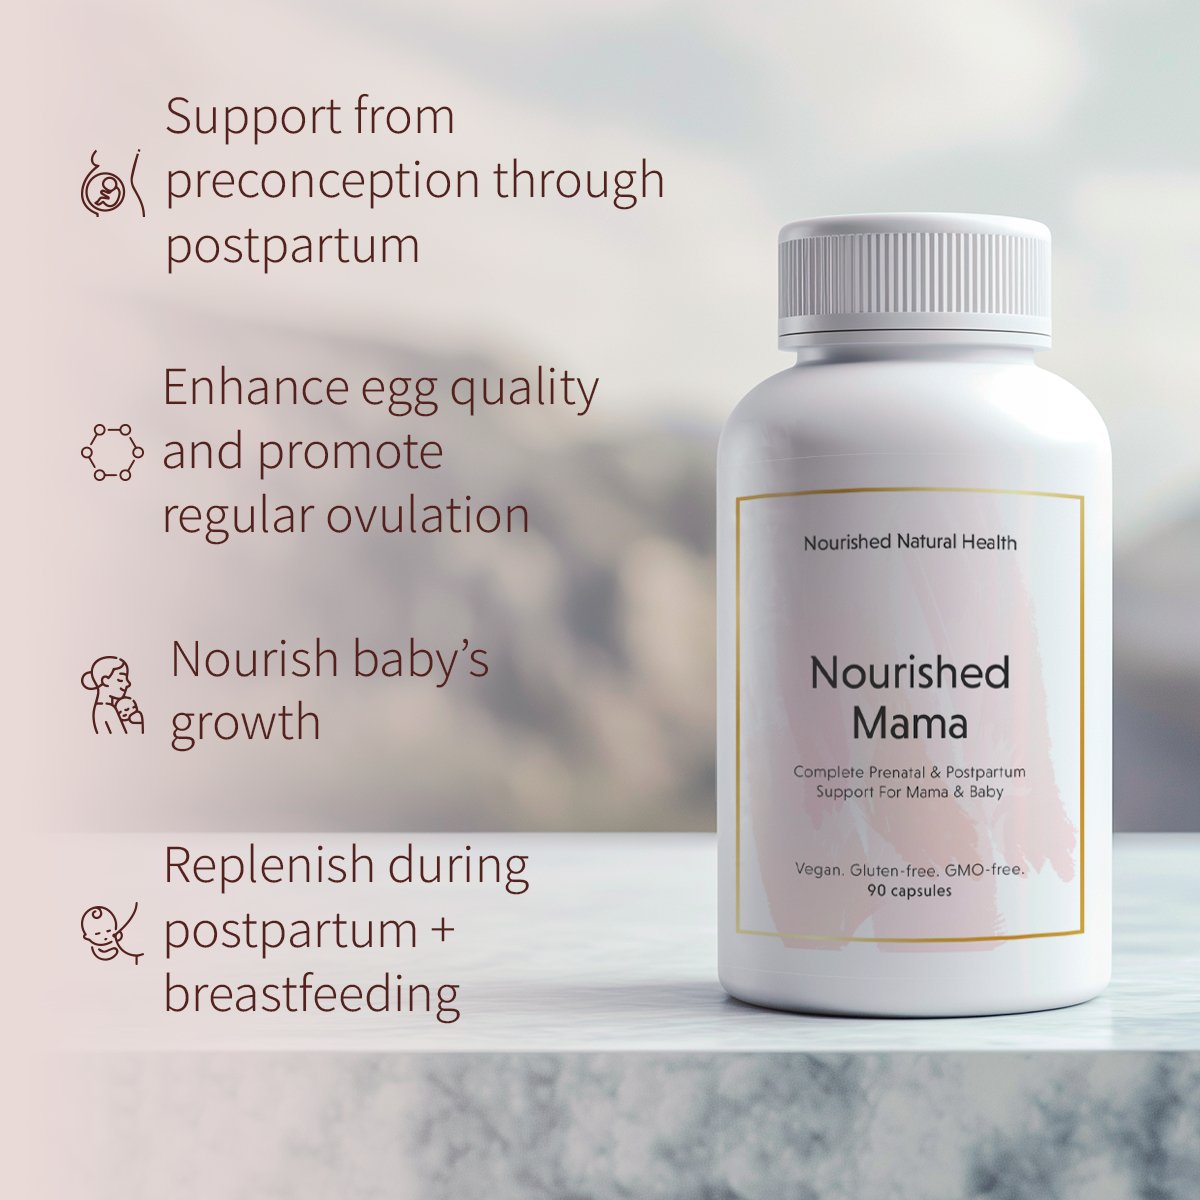 Vegan Pregnancy + Fertility + Postpartum Essentials Bundle - Bundle & Save - Nourished Natural Health